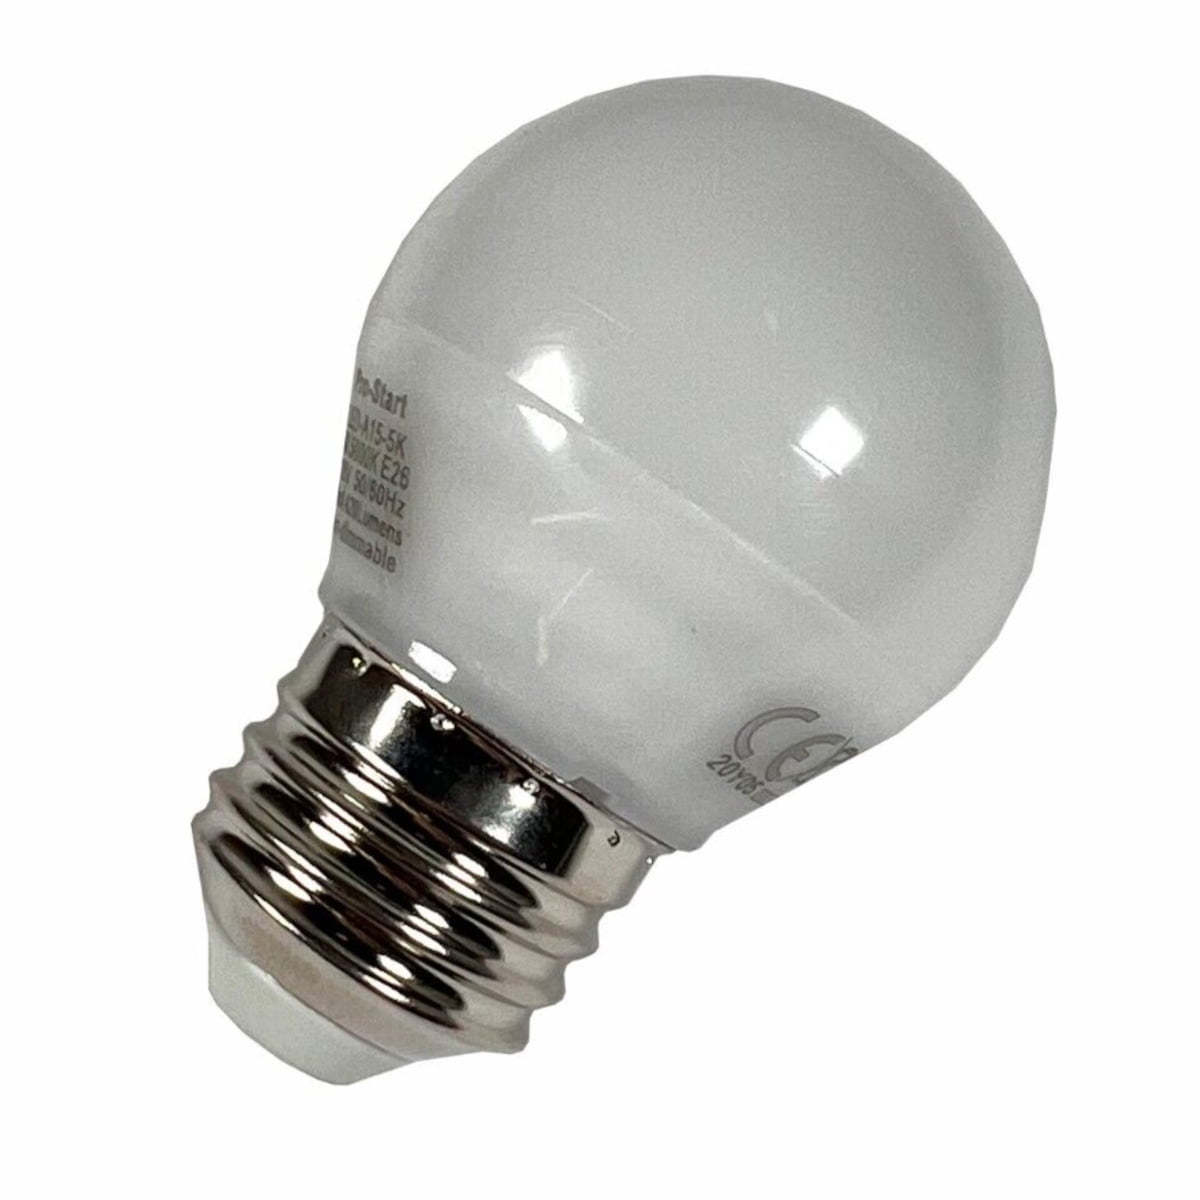 W11338583 Whirlpool Refrigerator Light Bulb; G4-3c